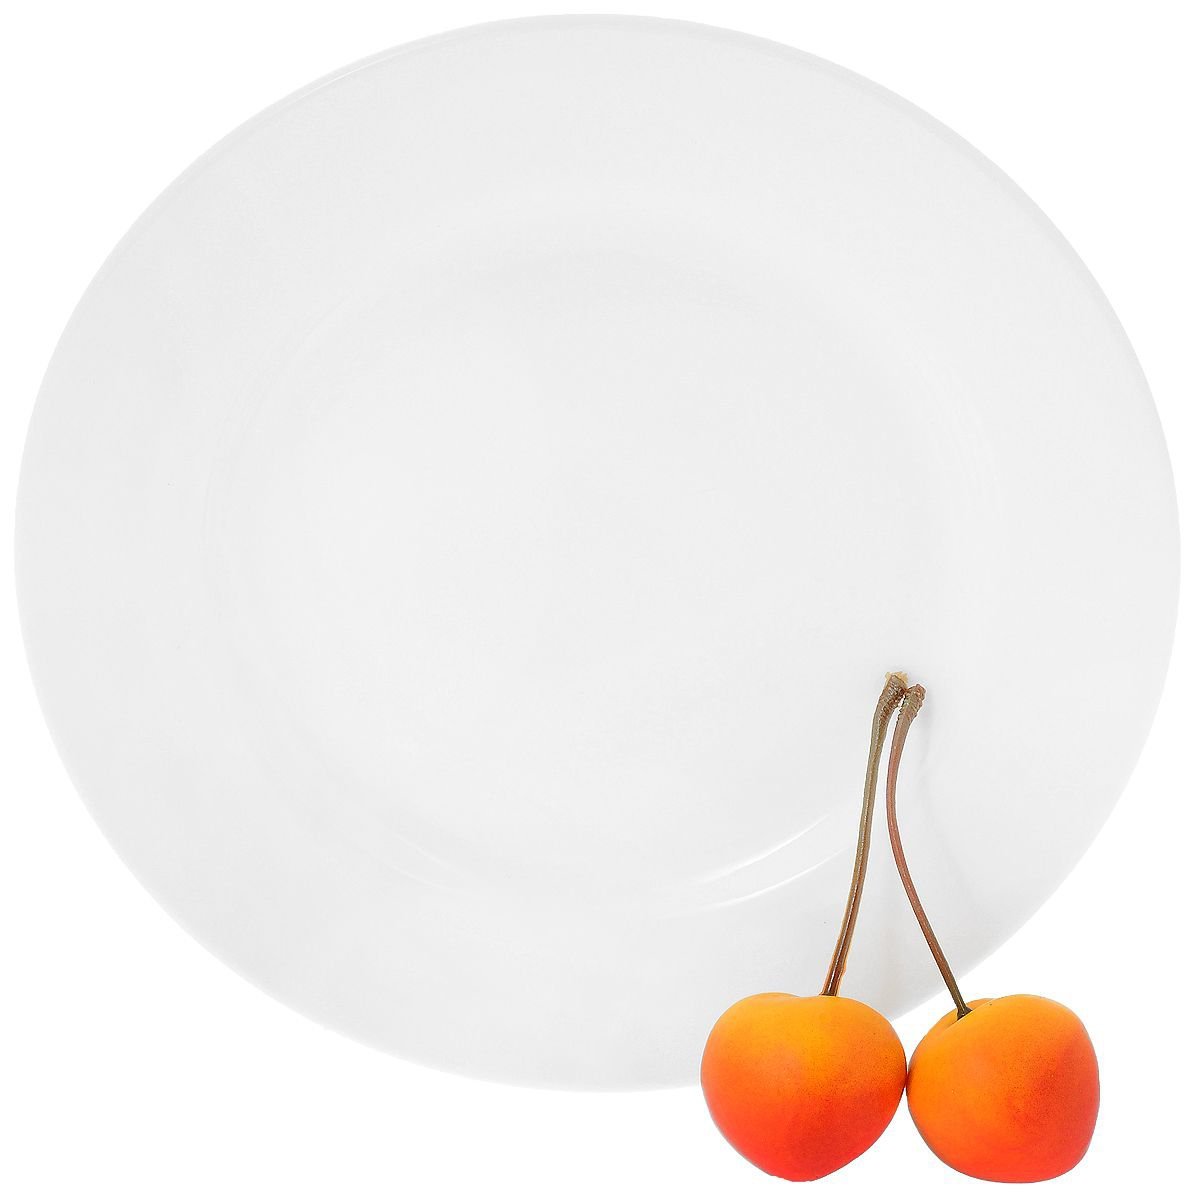 Wilmax Fine Porcelain Professional Bread Plate 6" | 15 Cm SKU: WL-991176/A